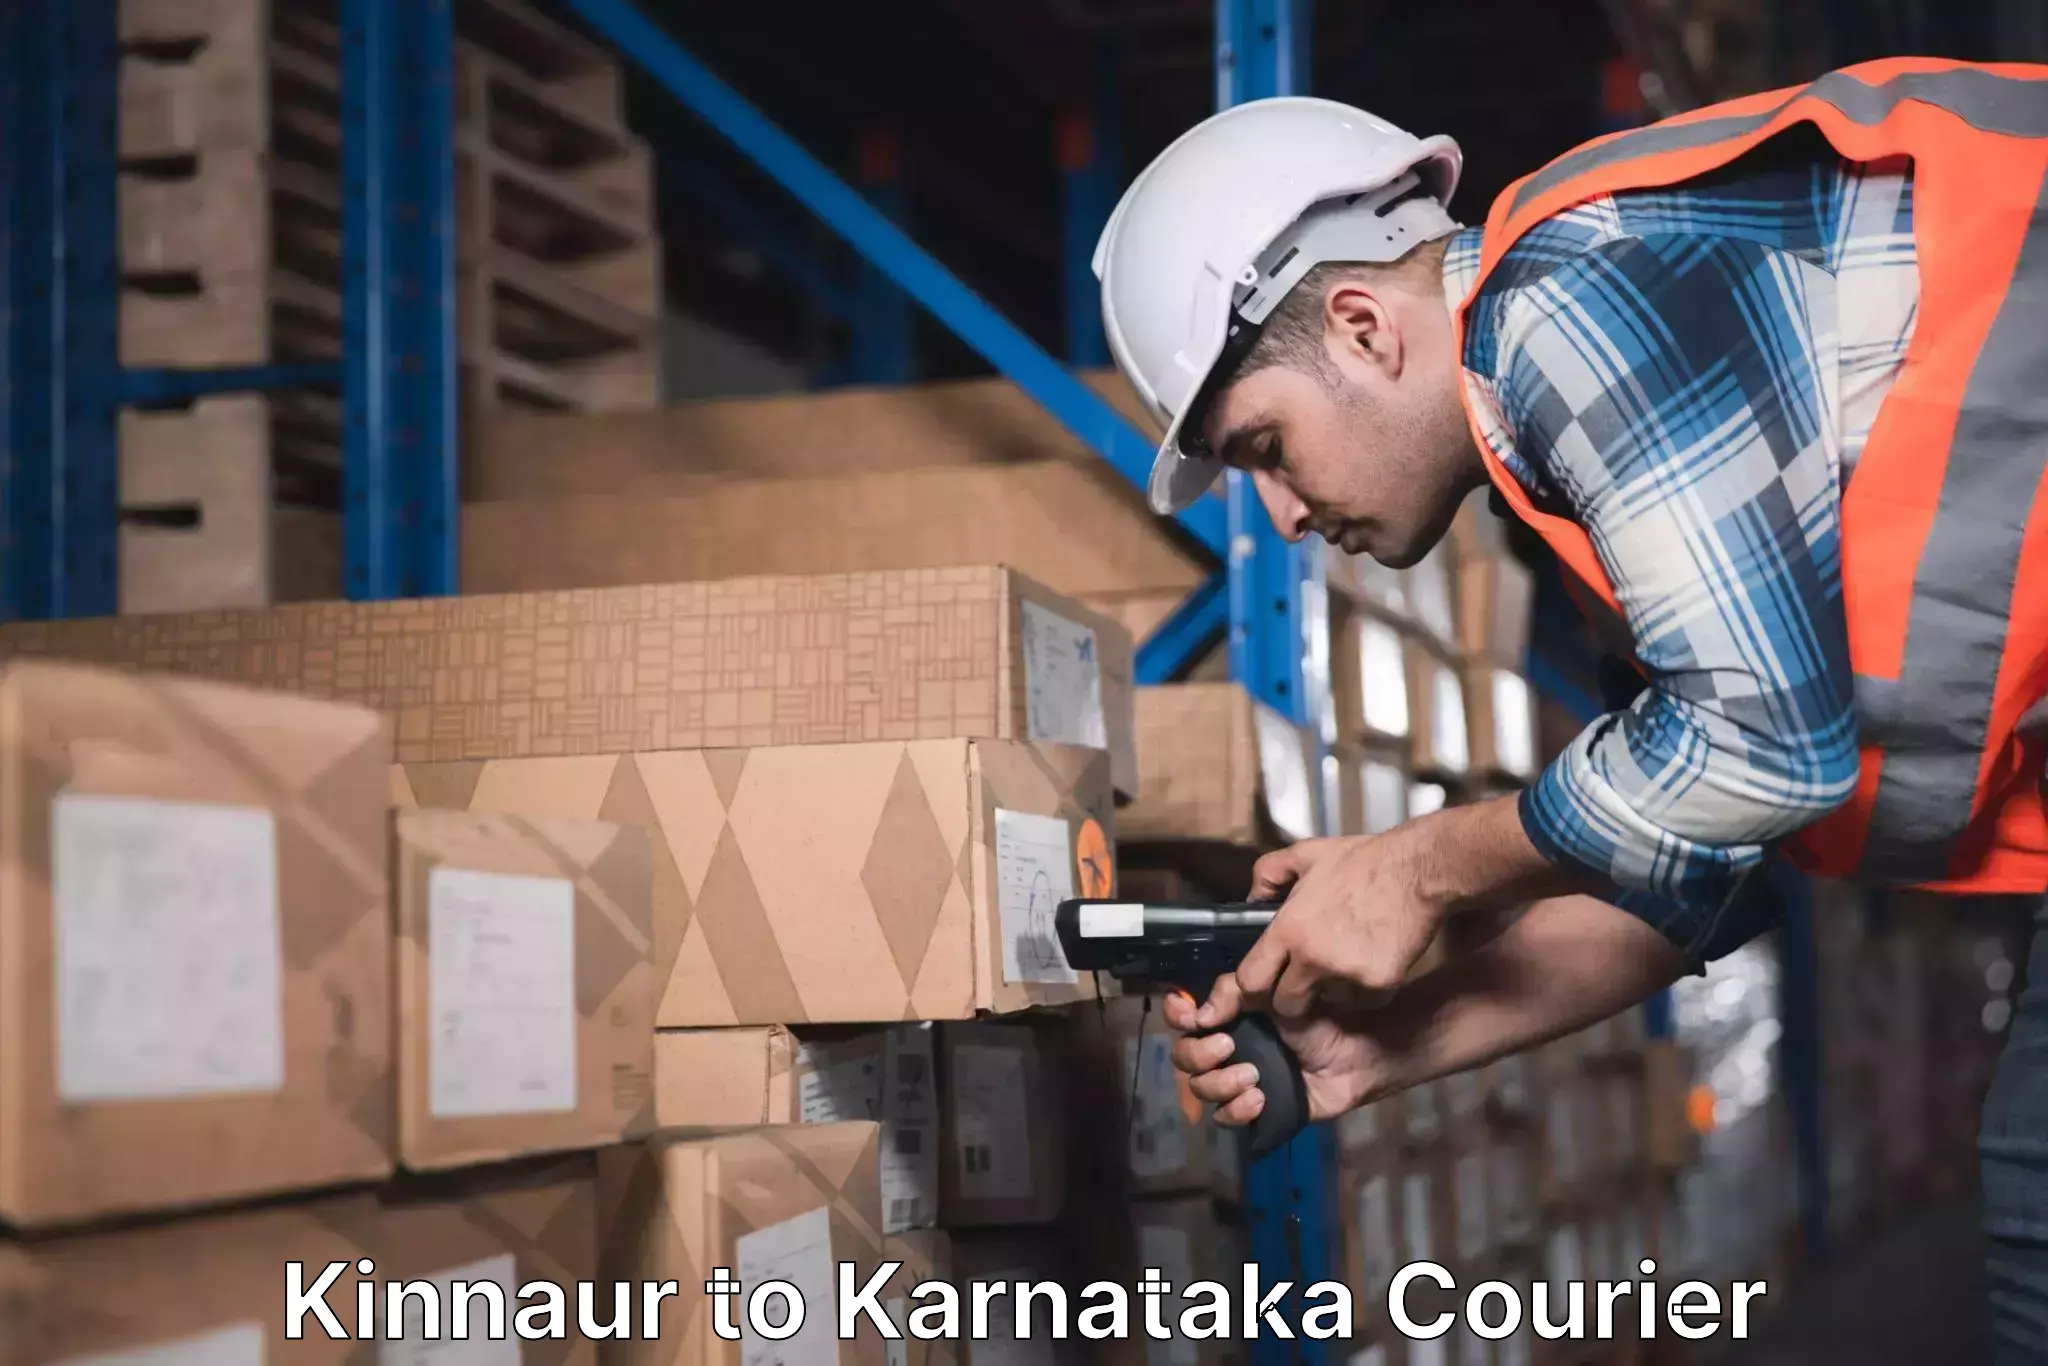 Digital shipping tools Kinnaur to Manipal